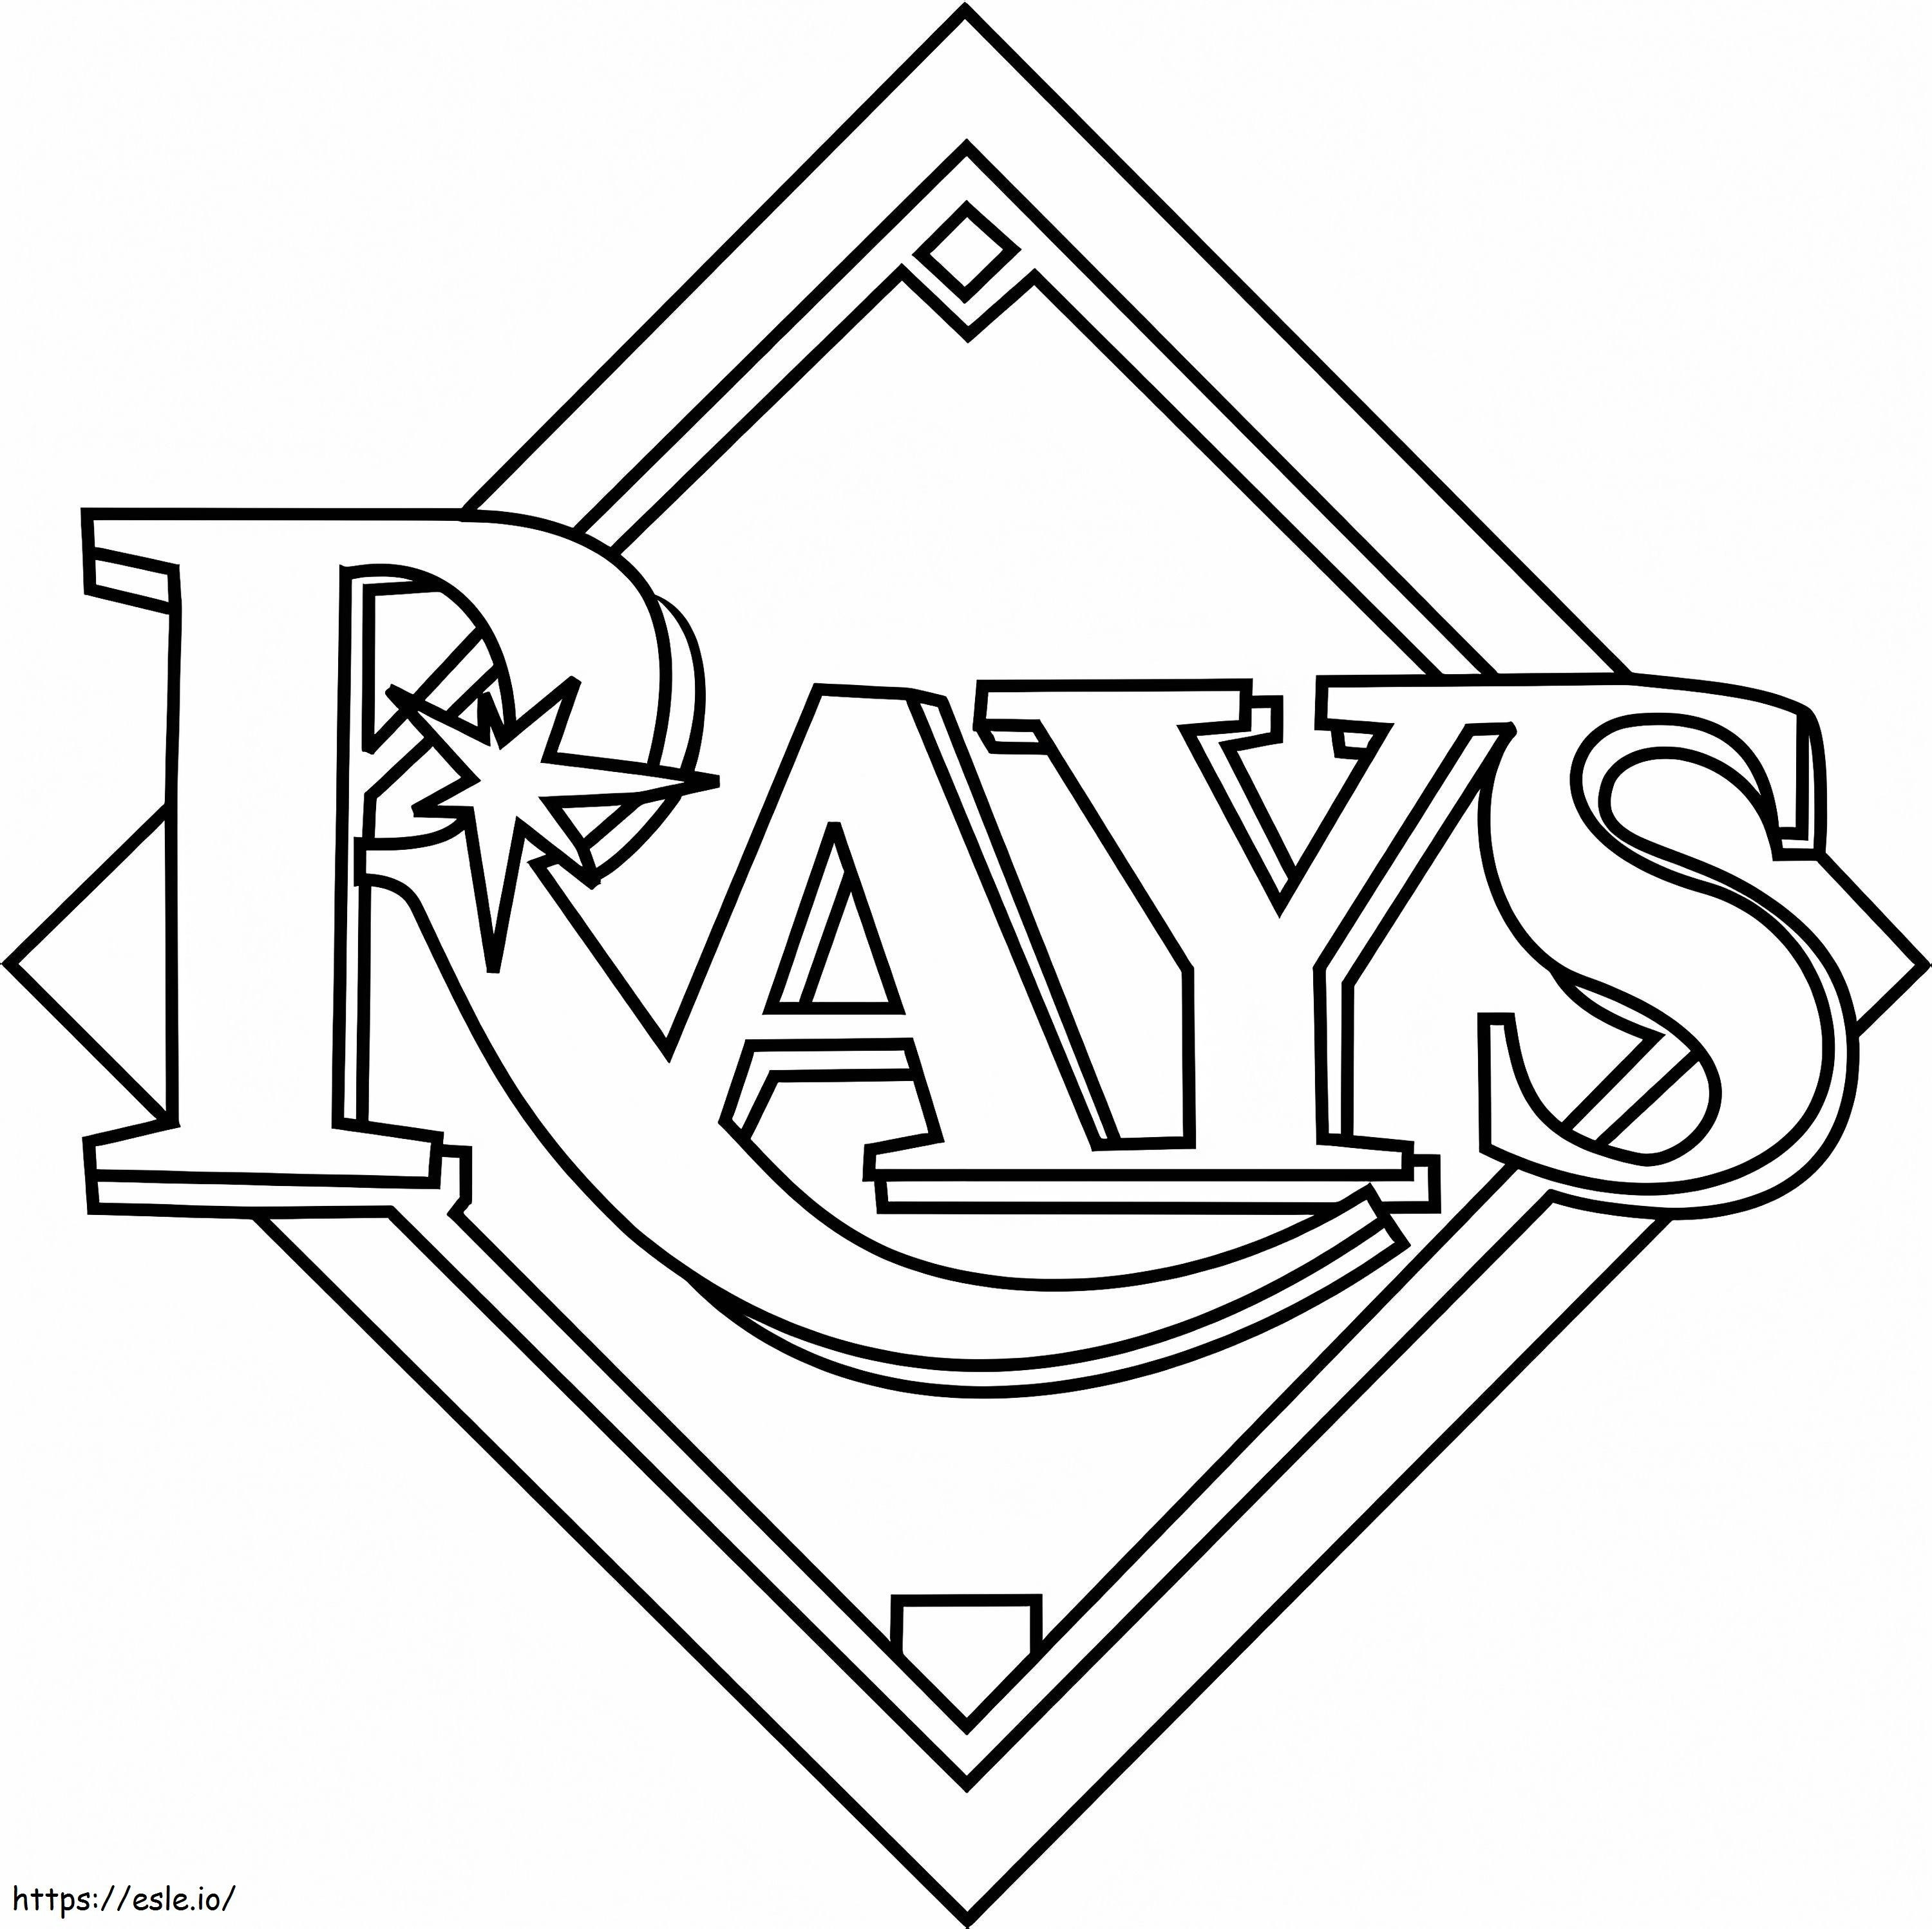 Tampa Bay Rays-logo kleurplaat kleurplaat